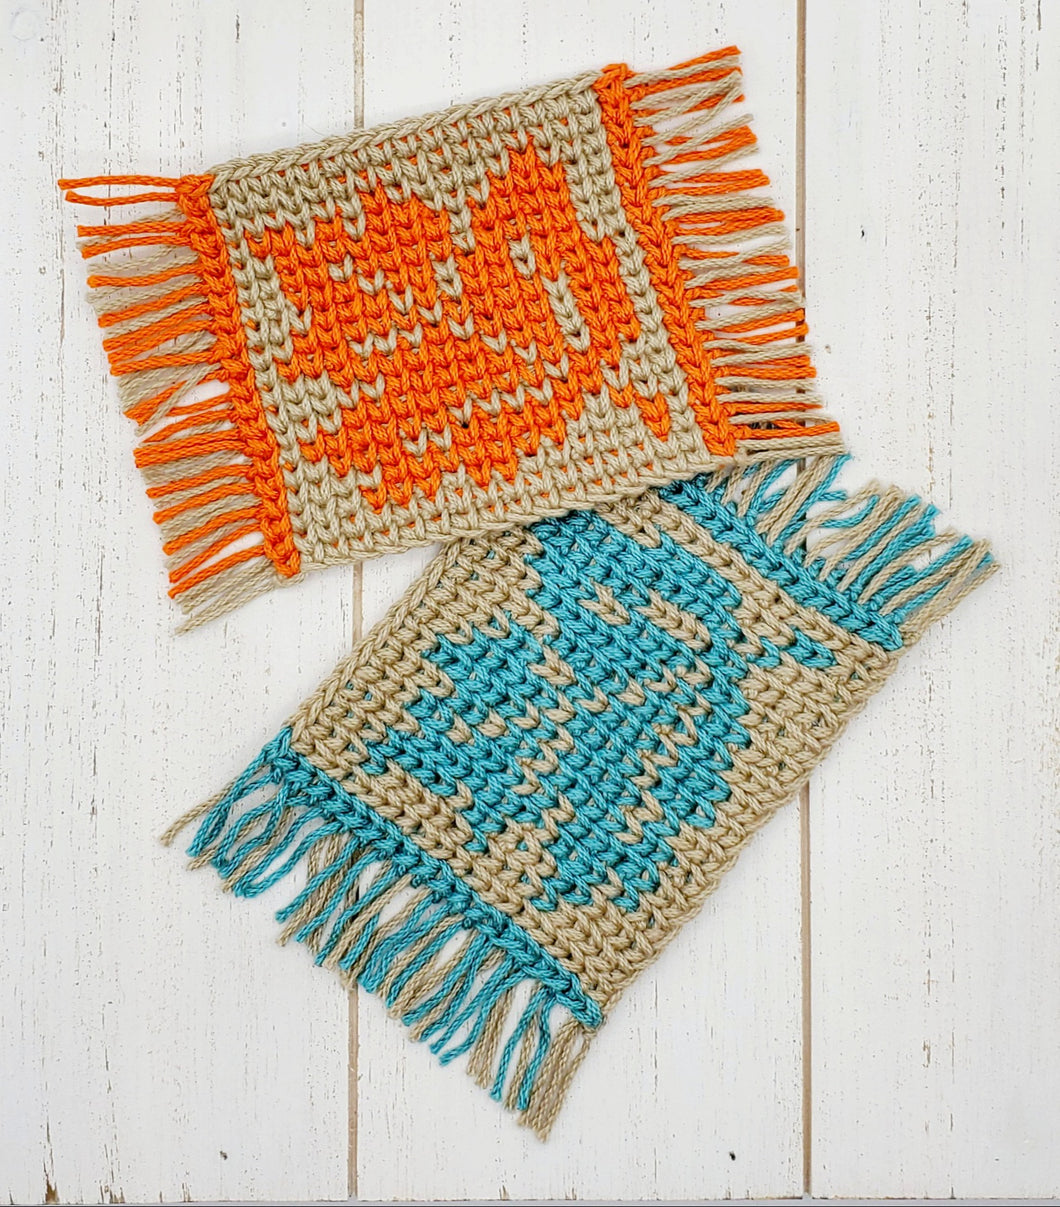 Maple Leaf Coaster Crochet PDF Pattern by Raine Eimre